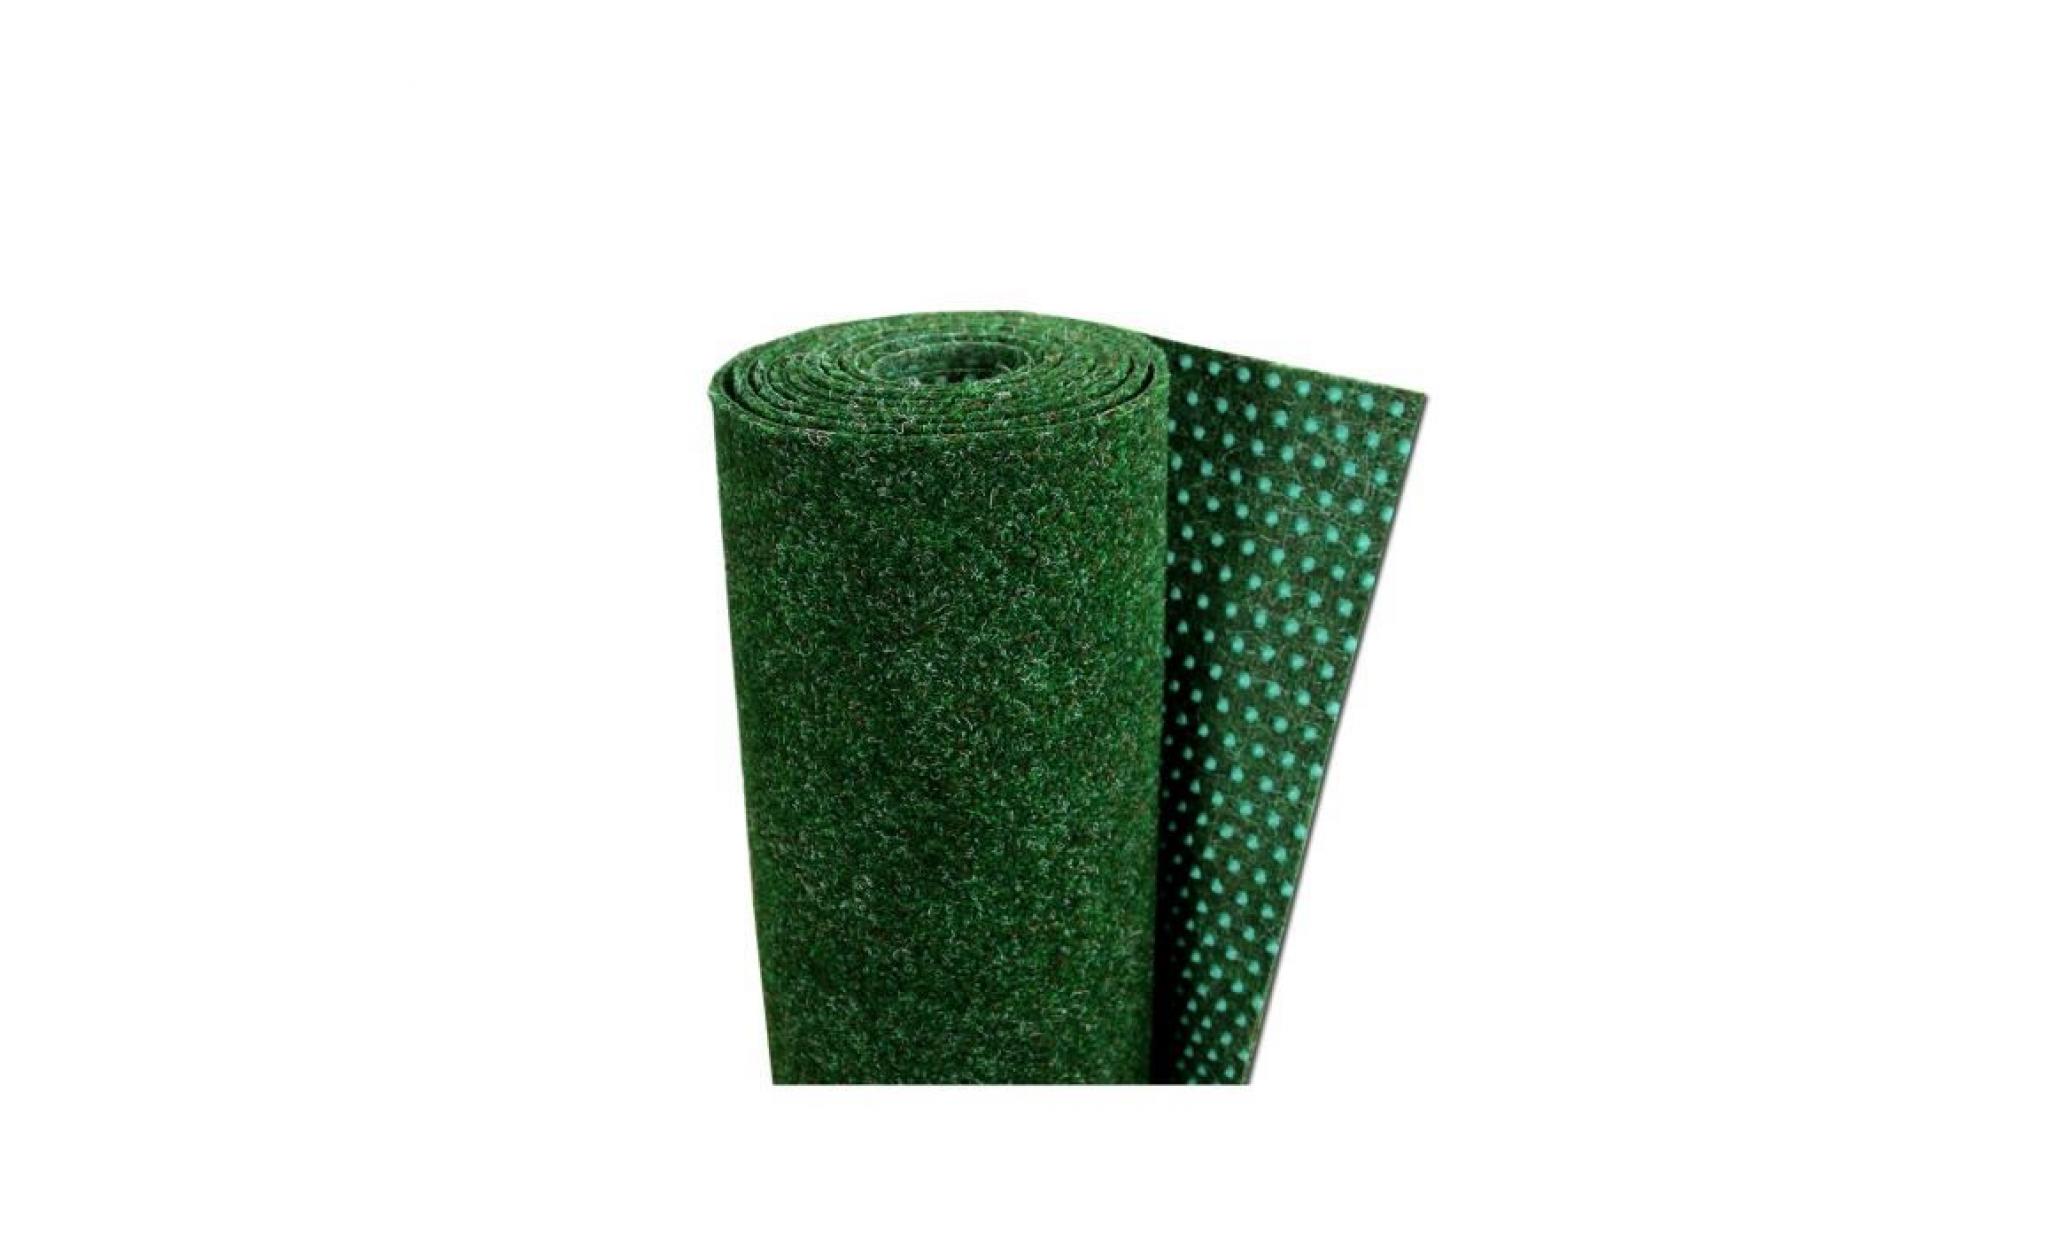 kingston   tapis type gazon artificiel – pour jardin, terrasse, balcon   anthracite [400x100 cm] pas cher